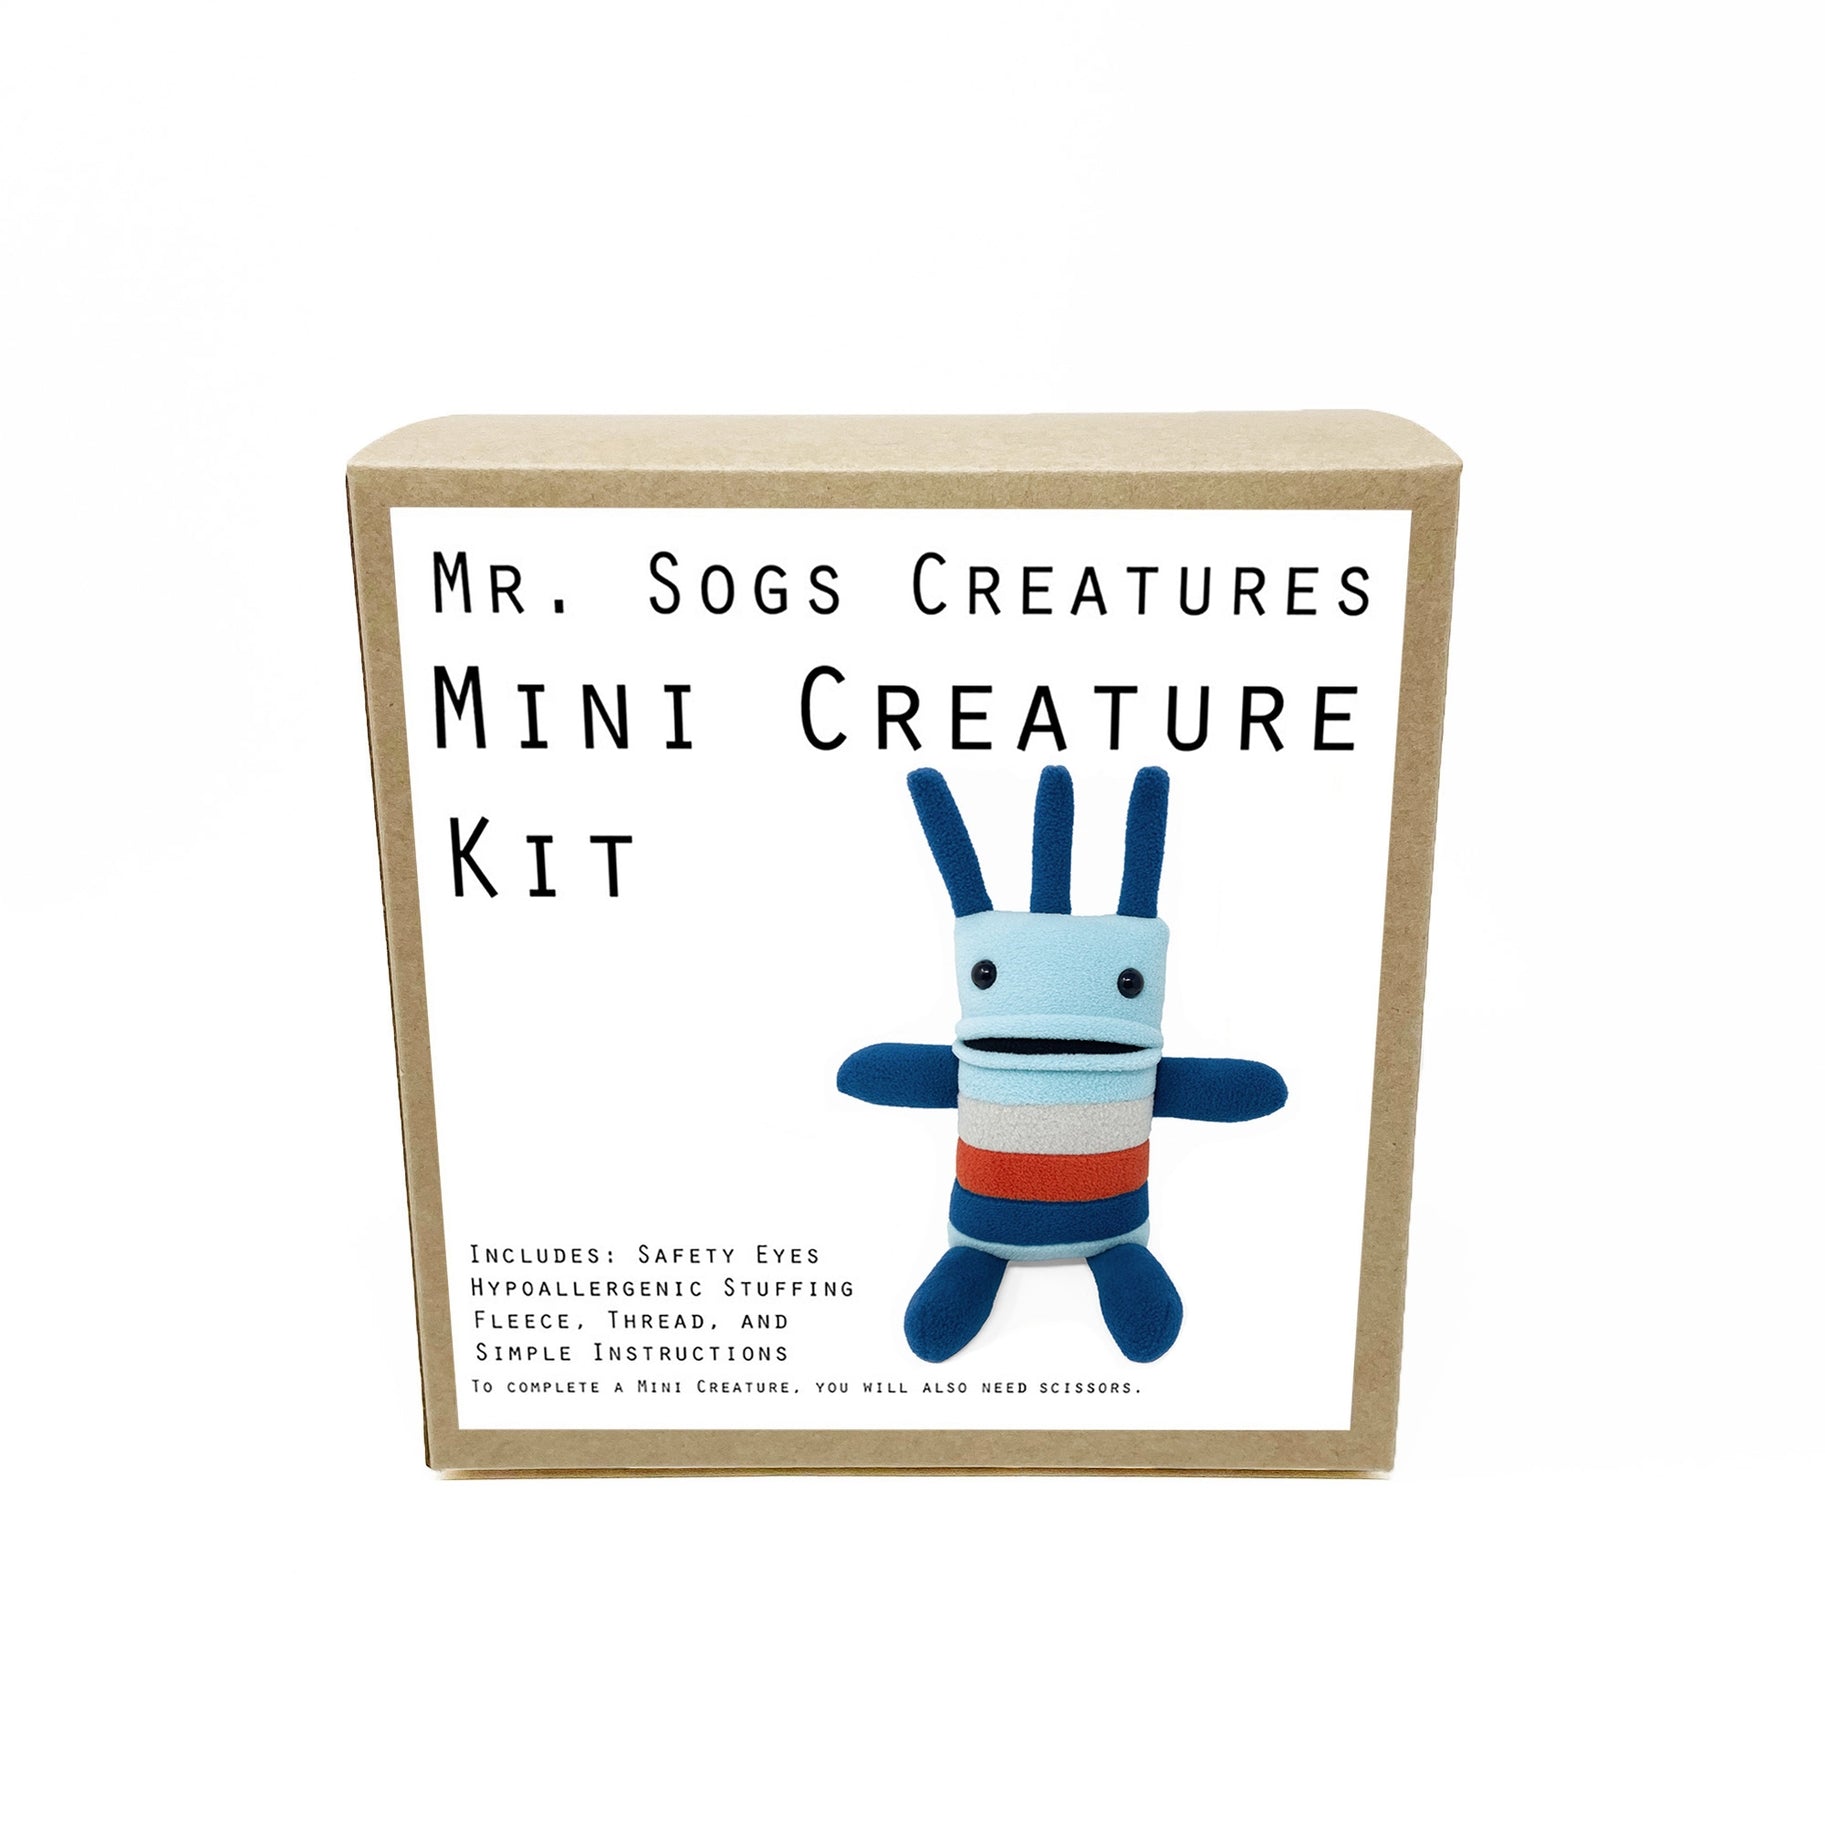 Light Blue Creature DIY Sewing Kit